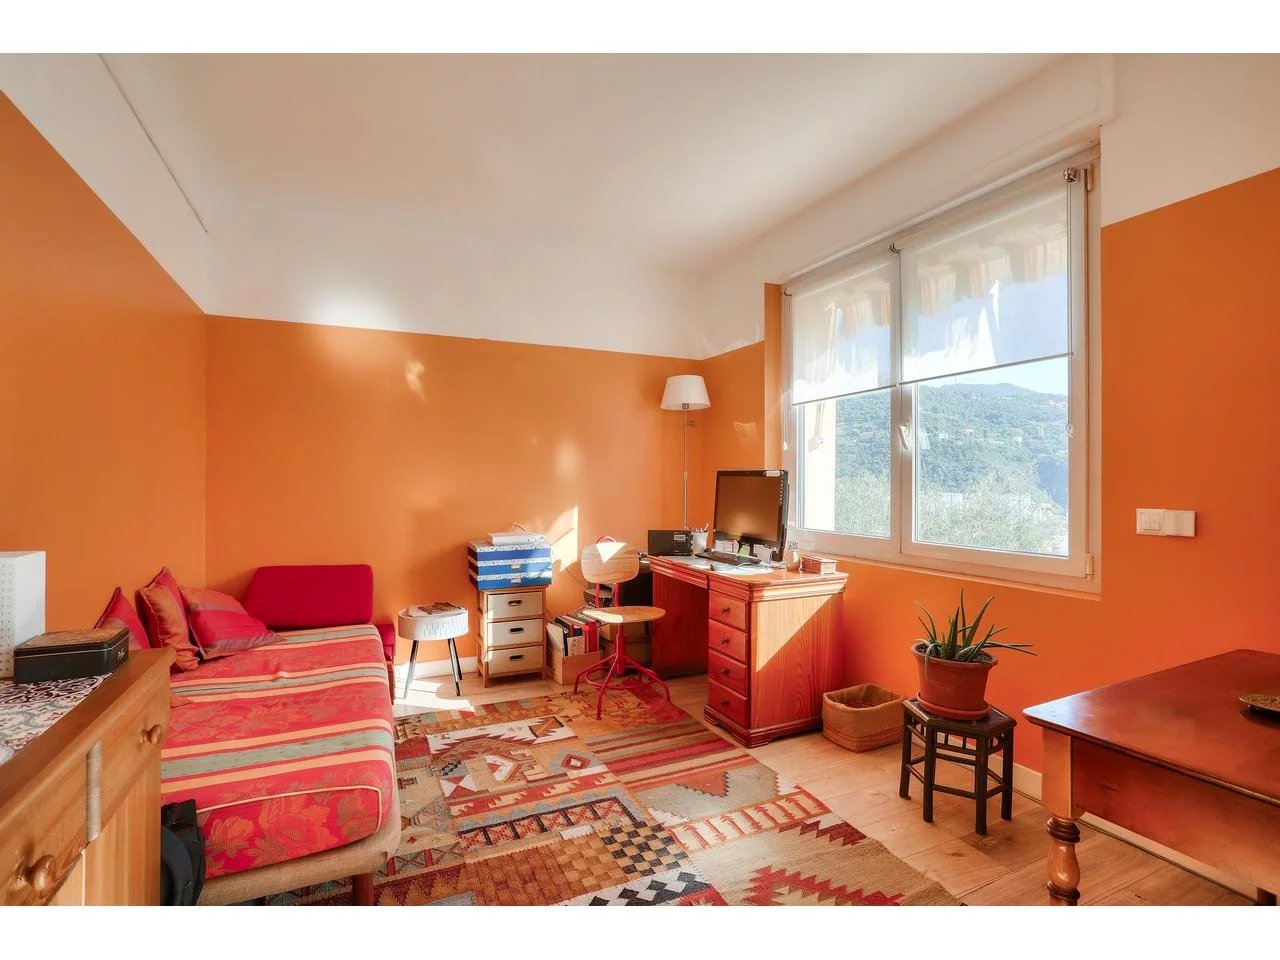 Appartement  4 Locali 78m2  In vendita   429 000 €